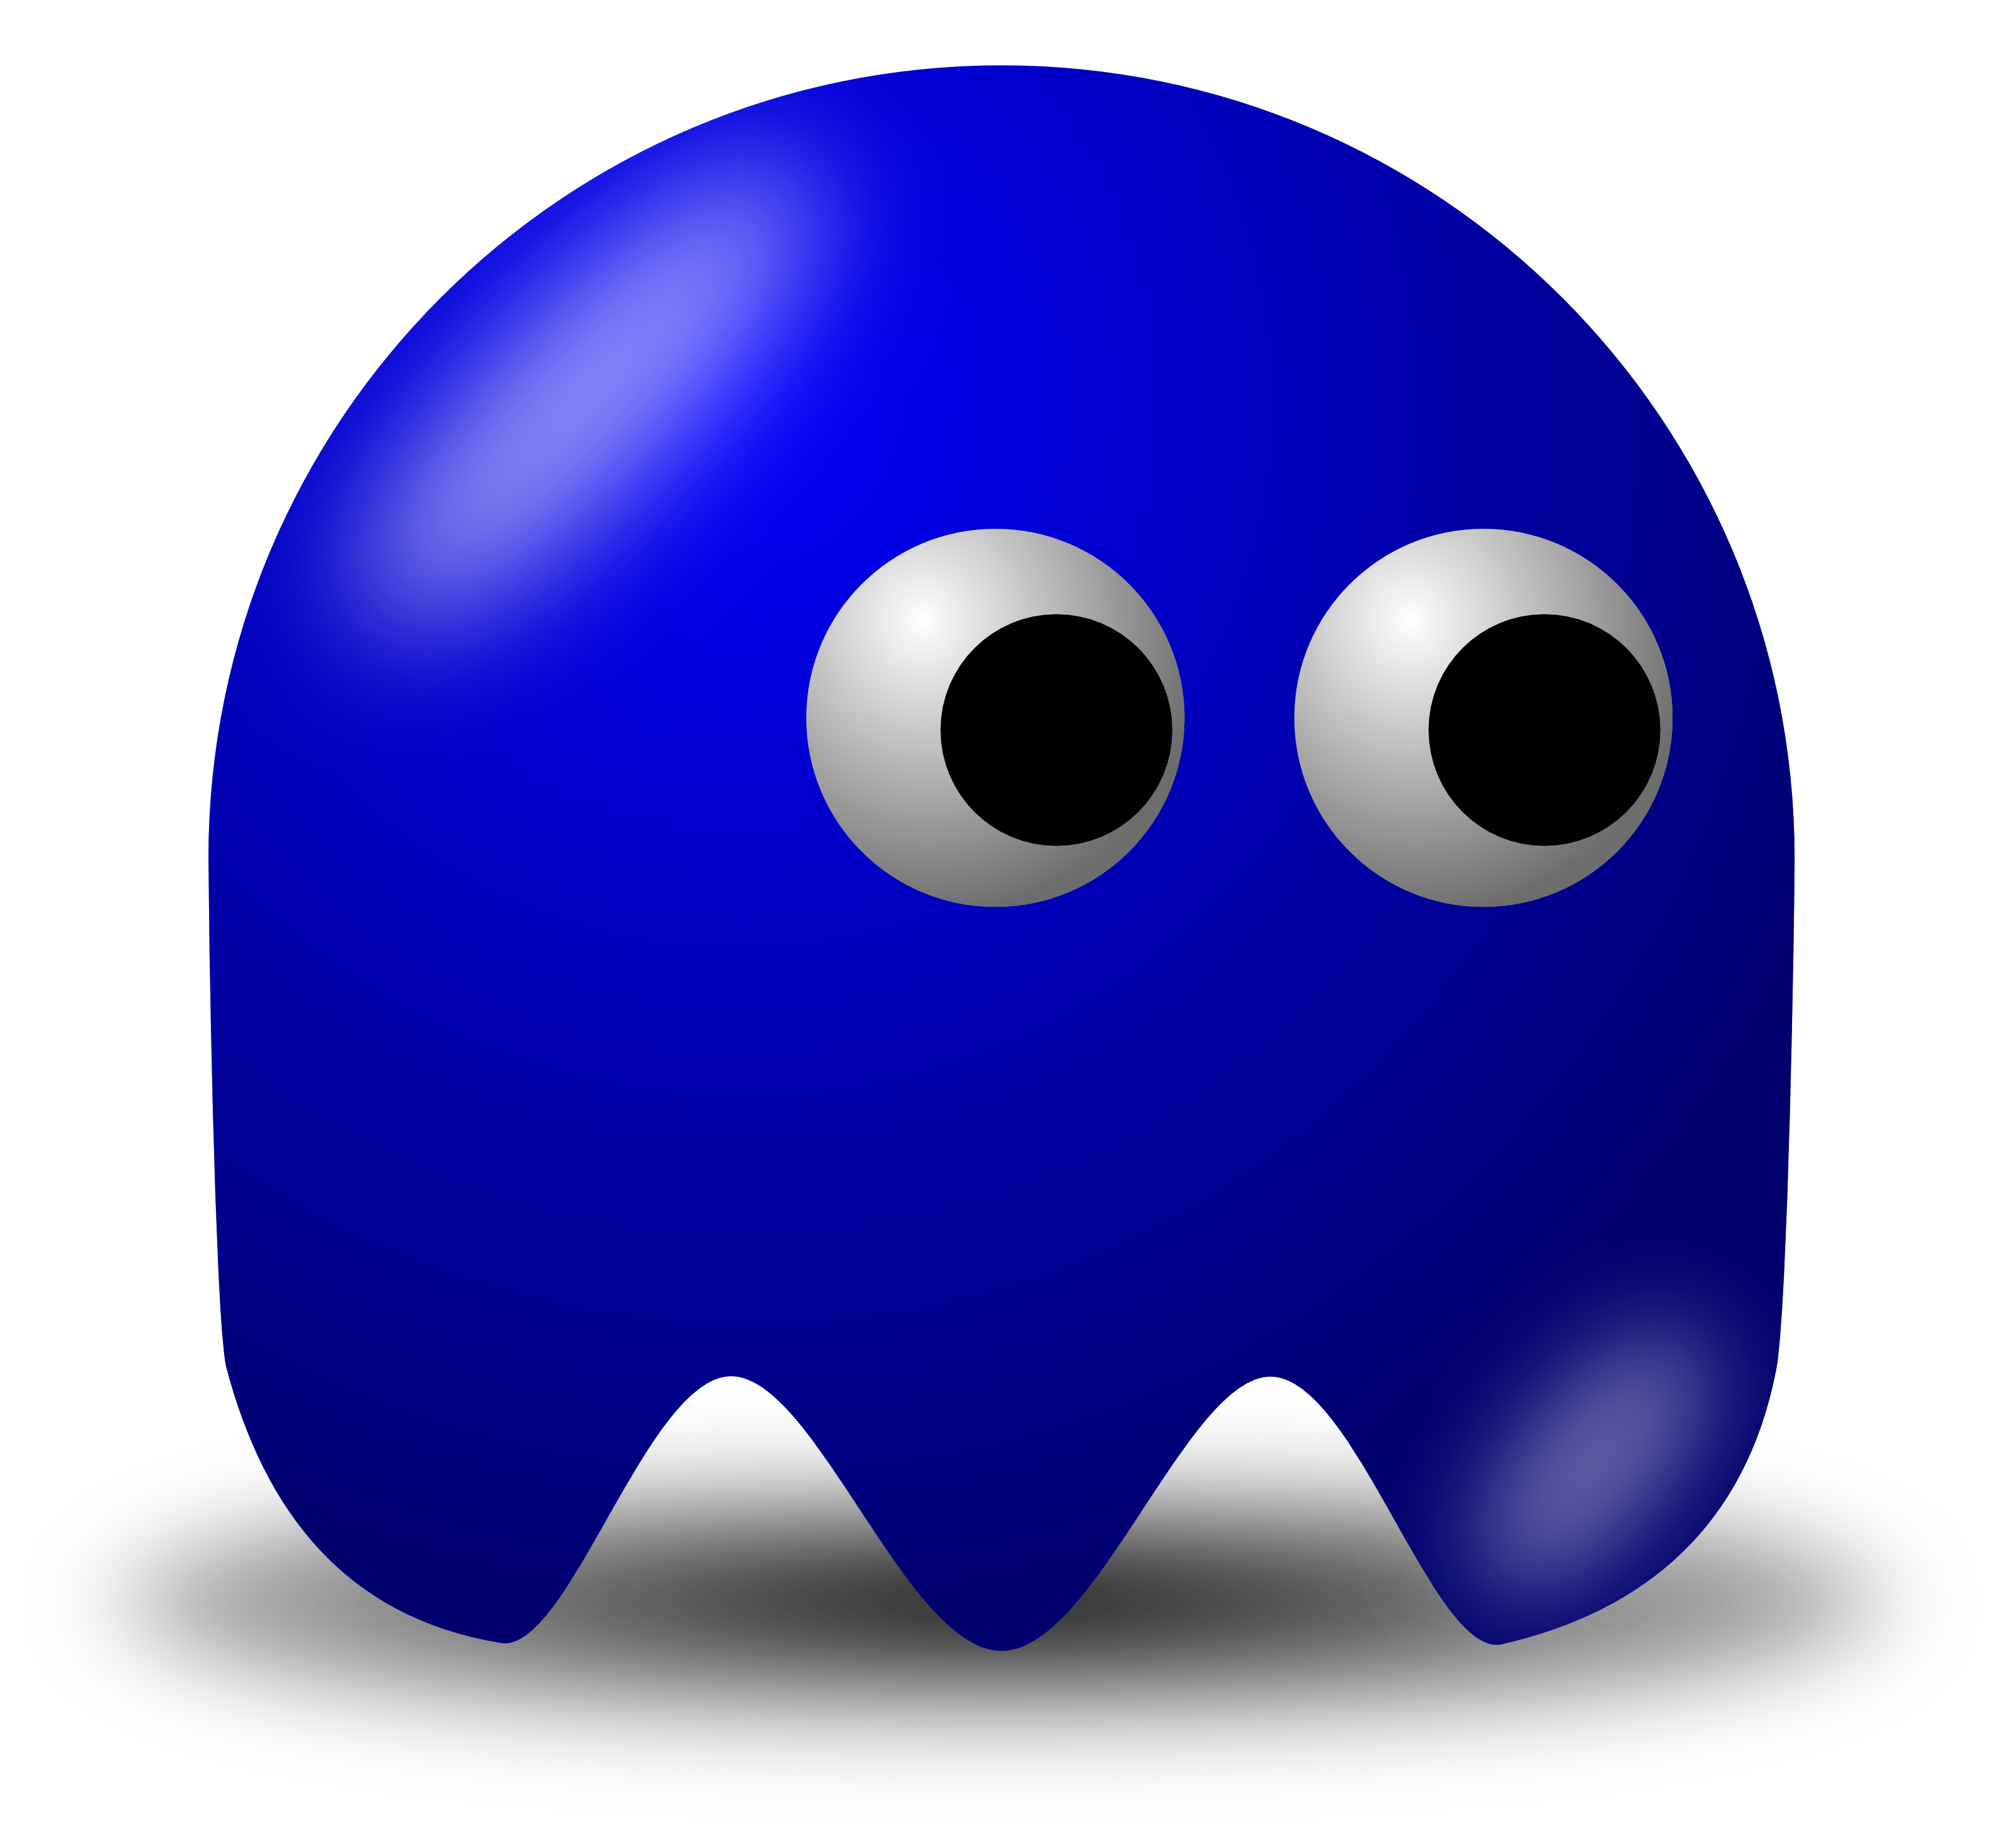 Dark Blue Avatar Character - Free Vector Clipart Illustration